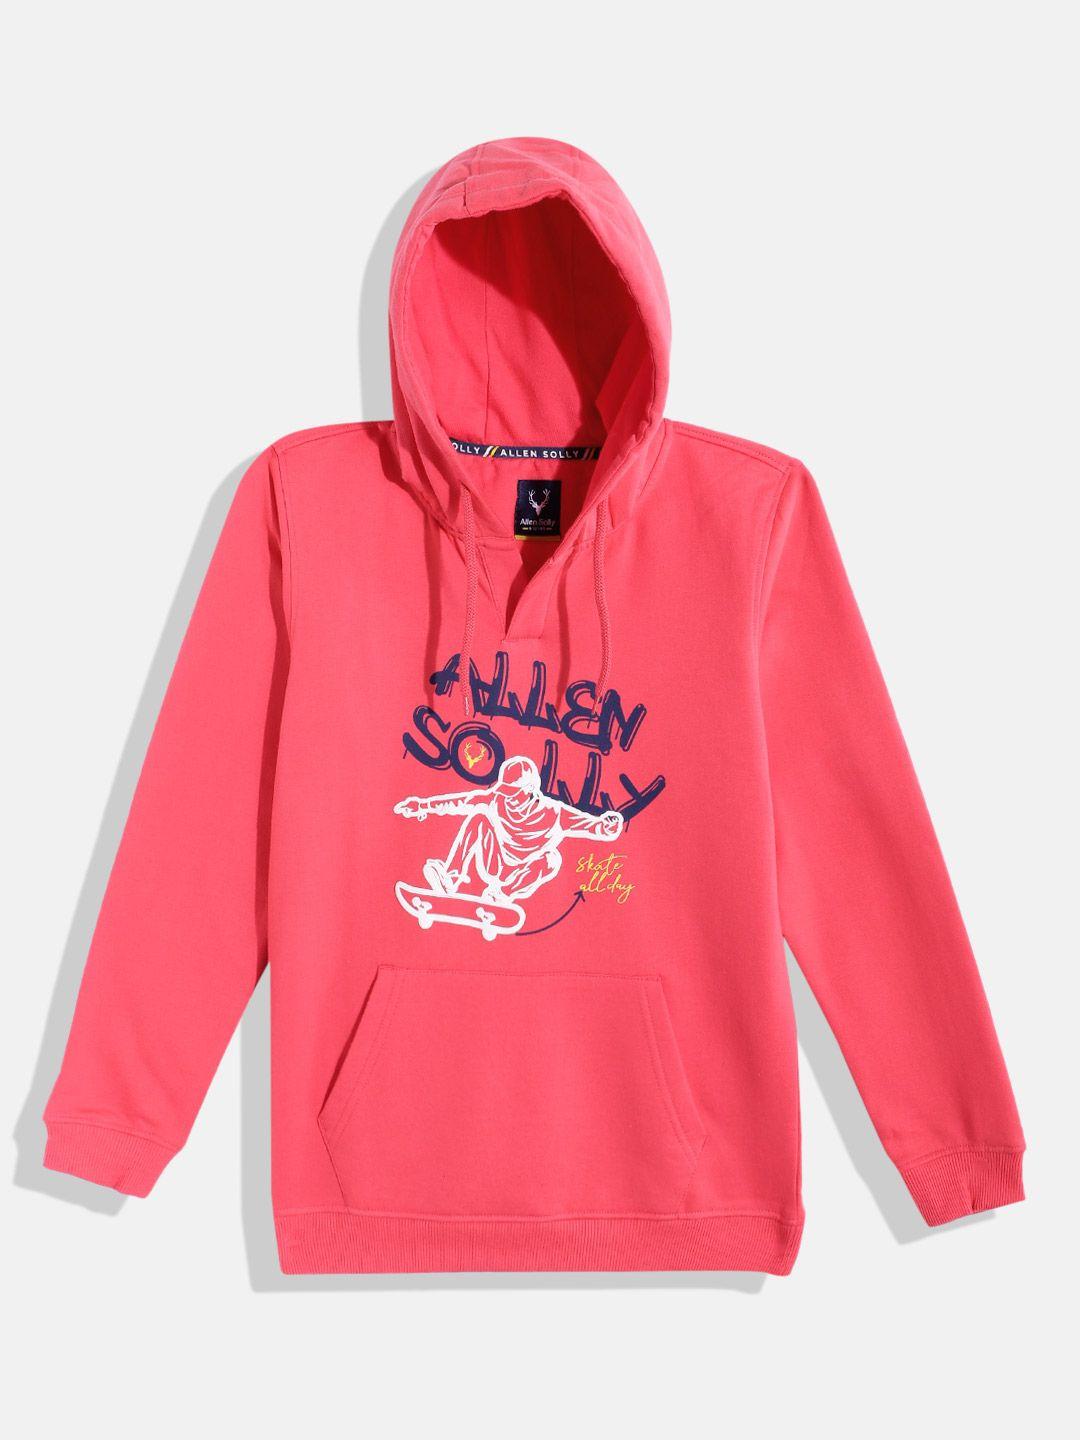 allen solly junior boys typography & graphic print hooded sweatshirt